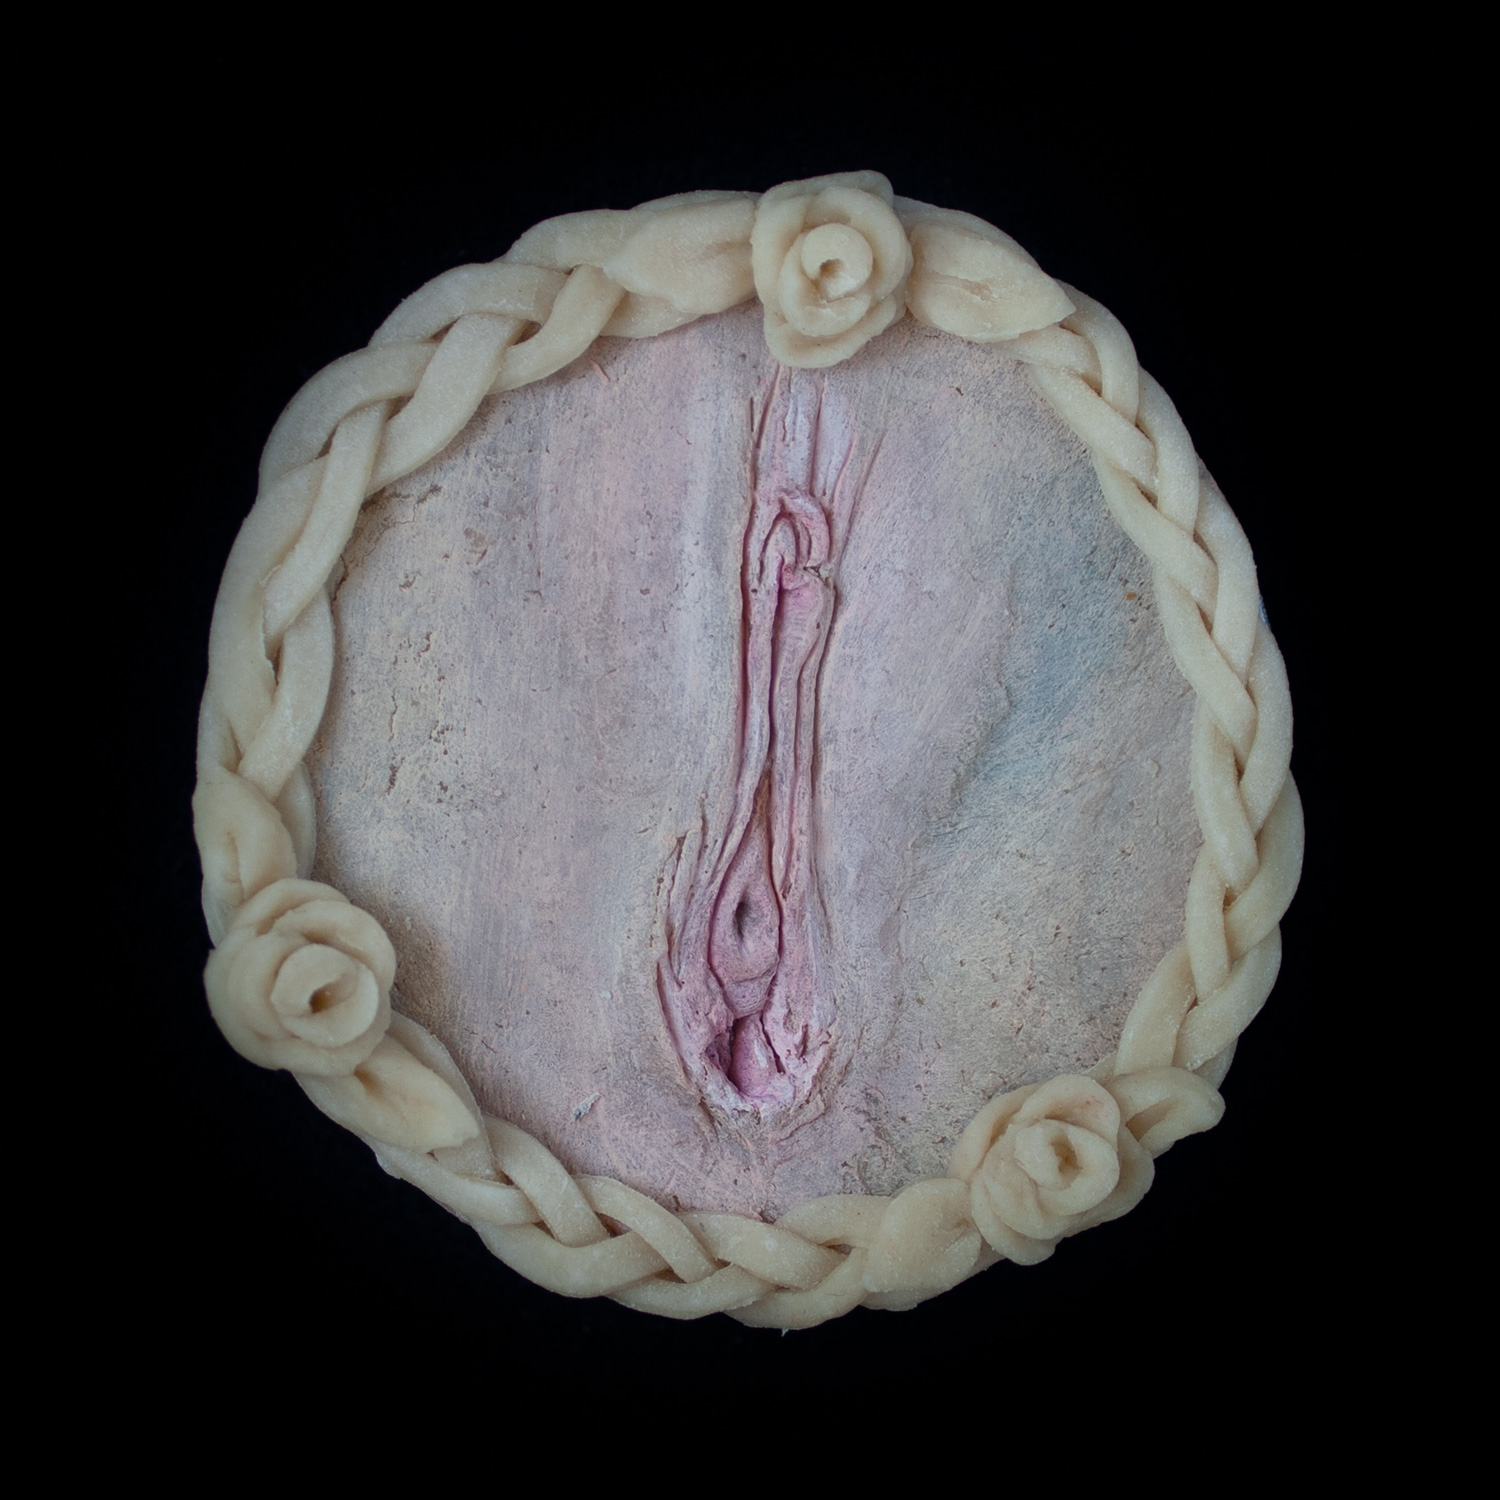 A pie with vulva pie crust art on a black background. 